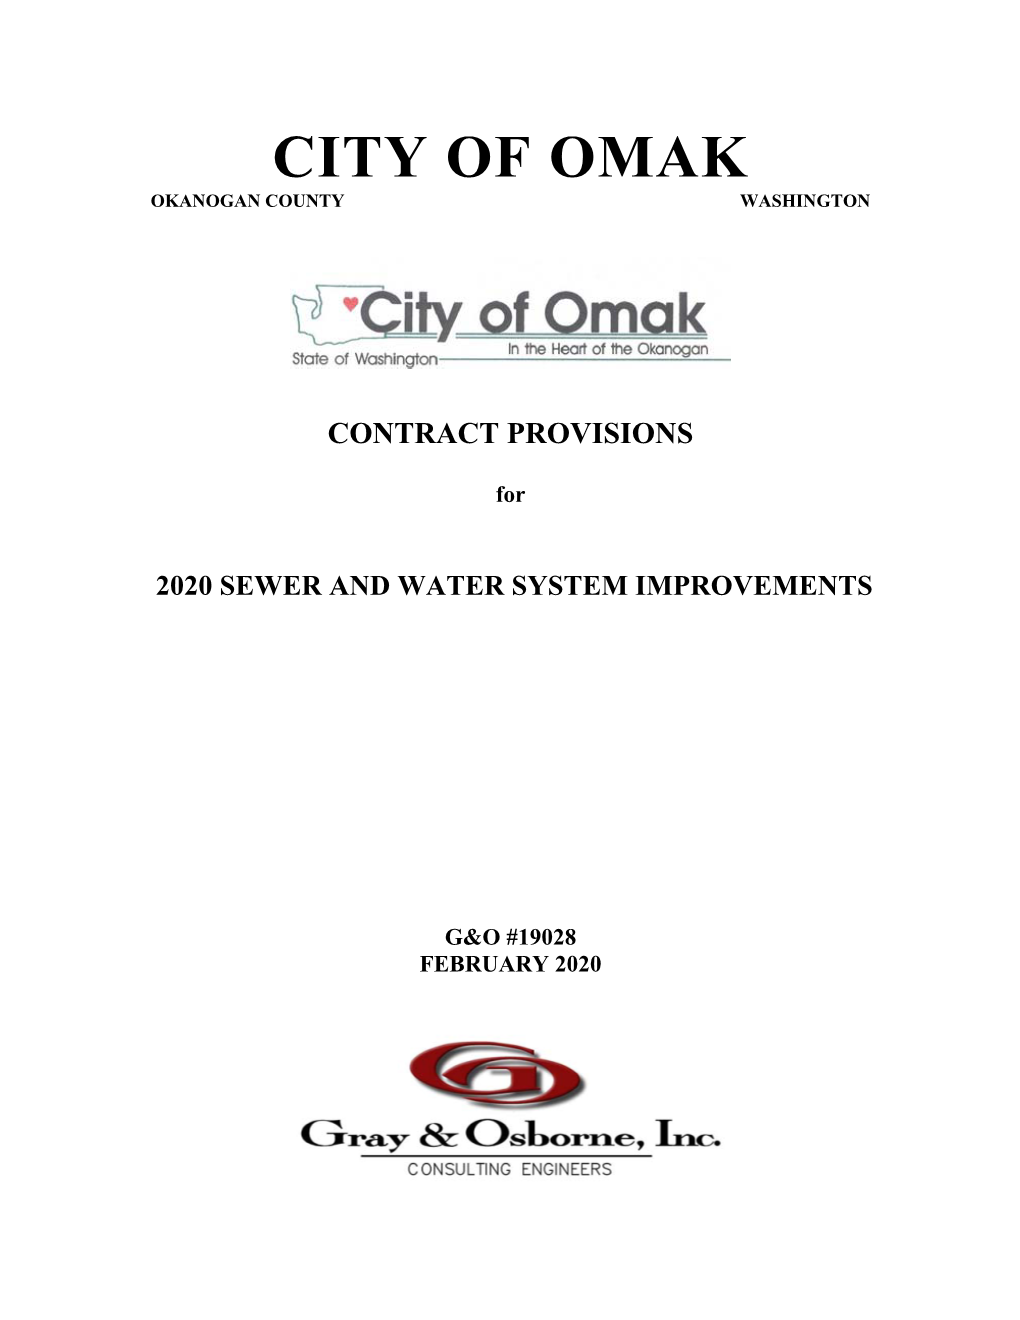 City of Omak Okanogan County Washington